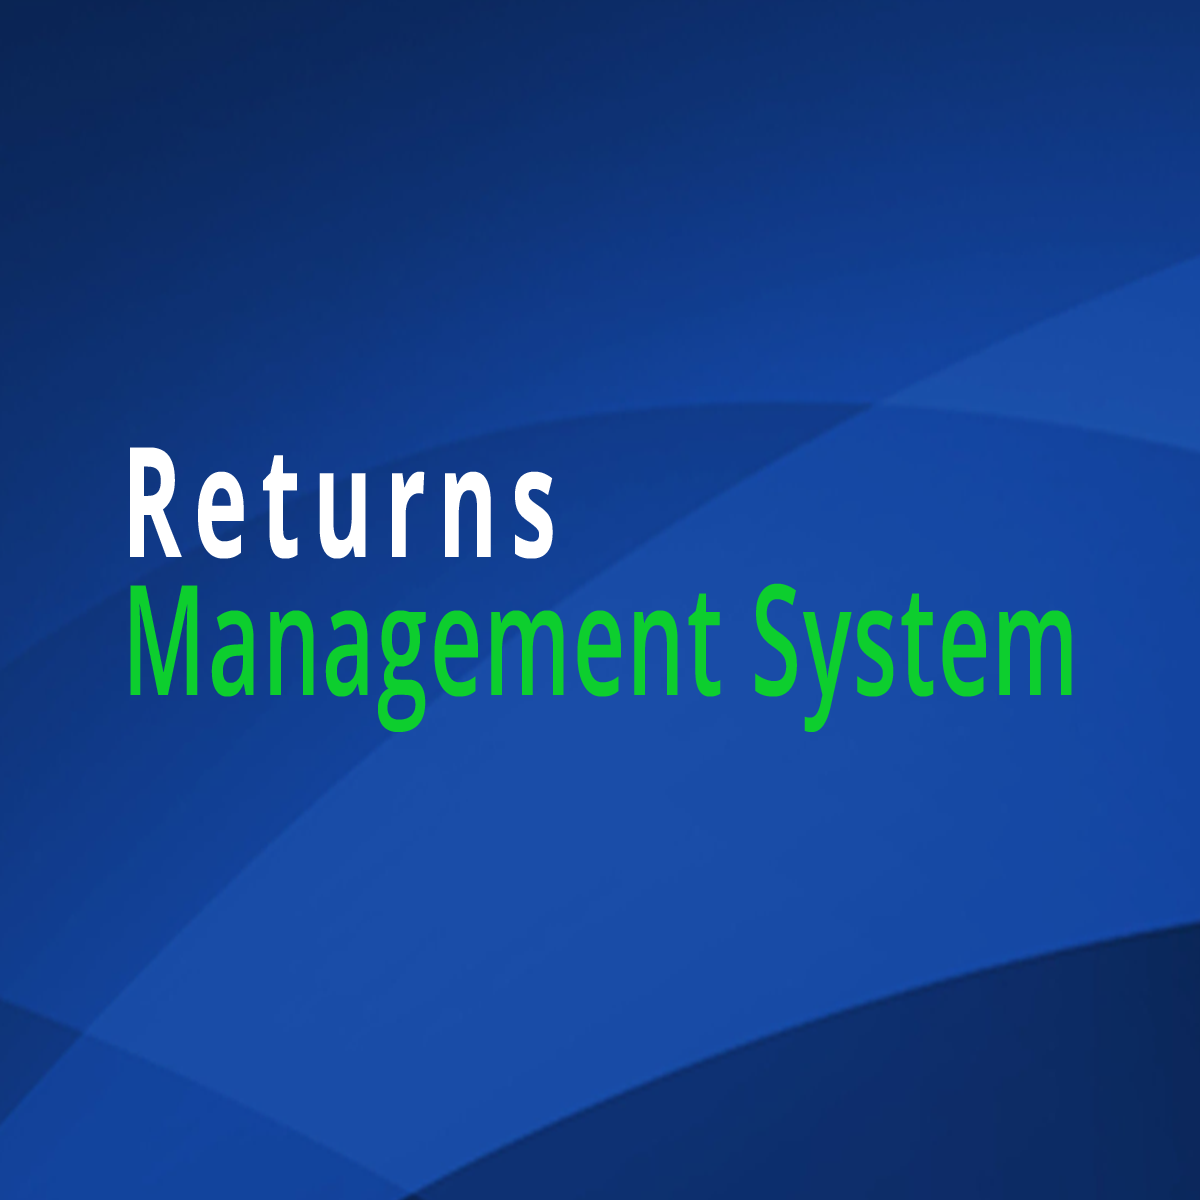 Returns Management System